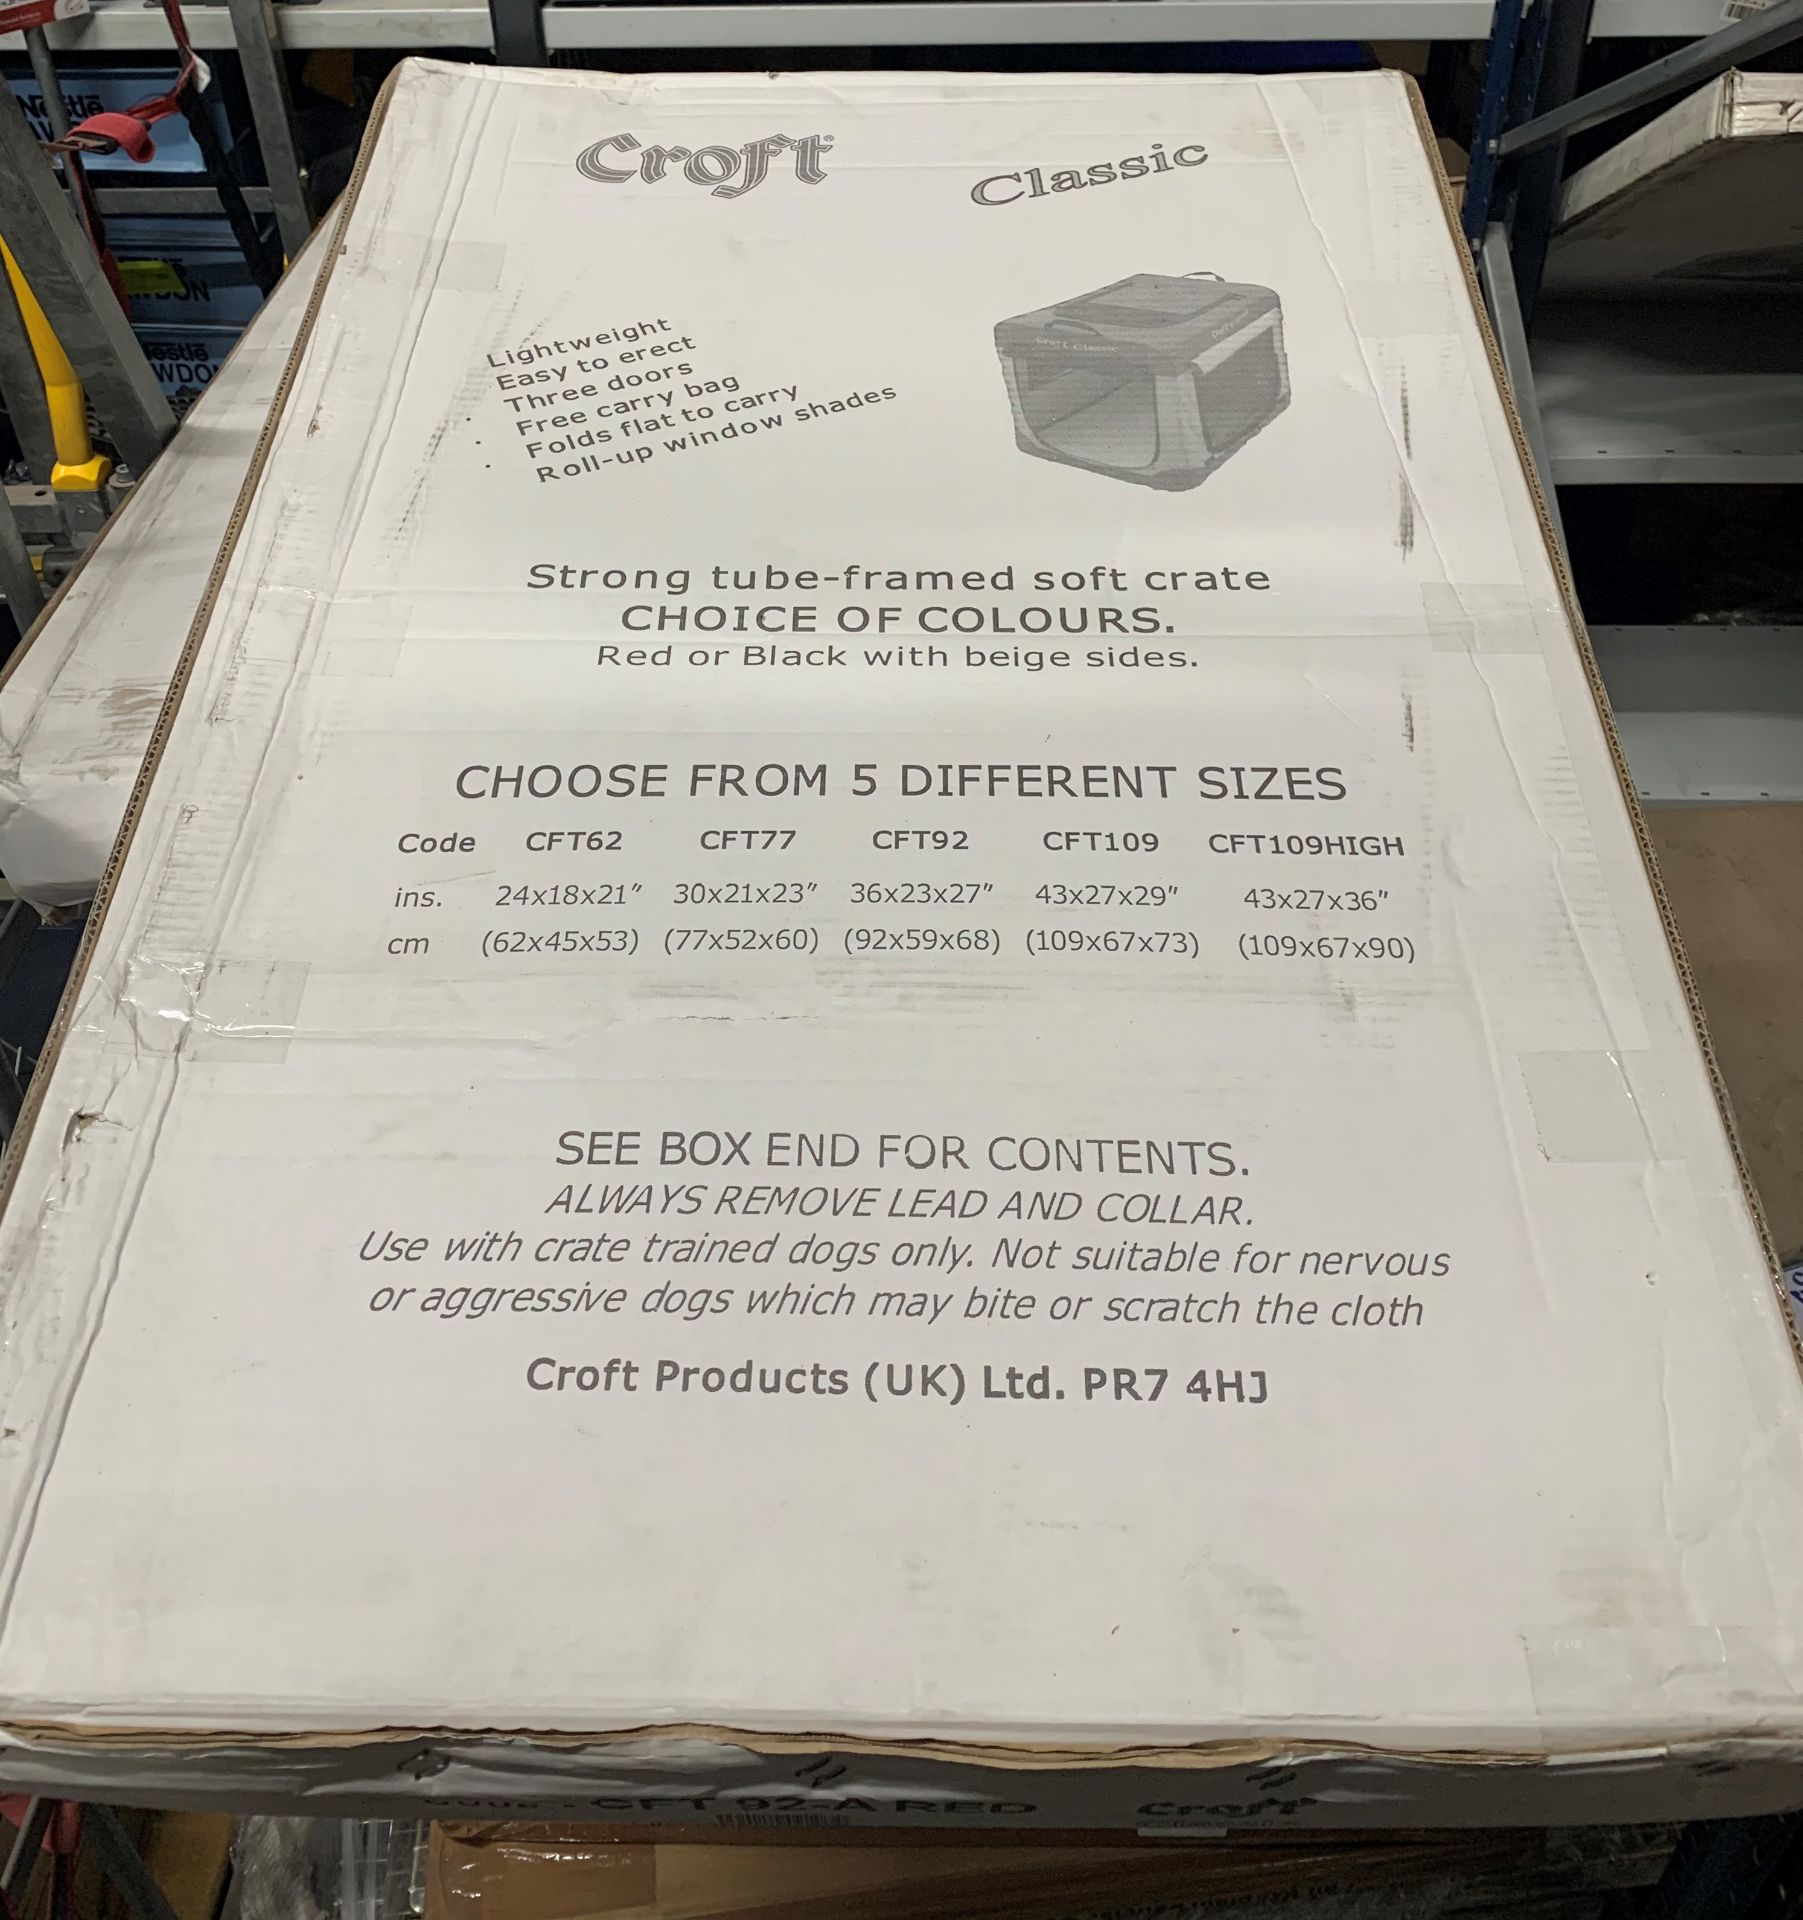 croft calssic soft crate